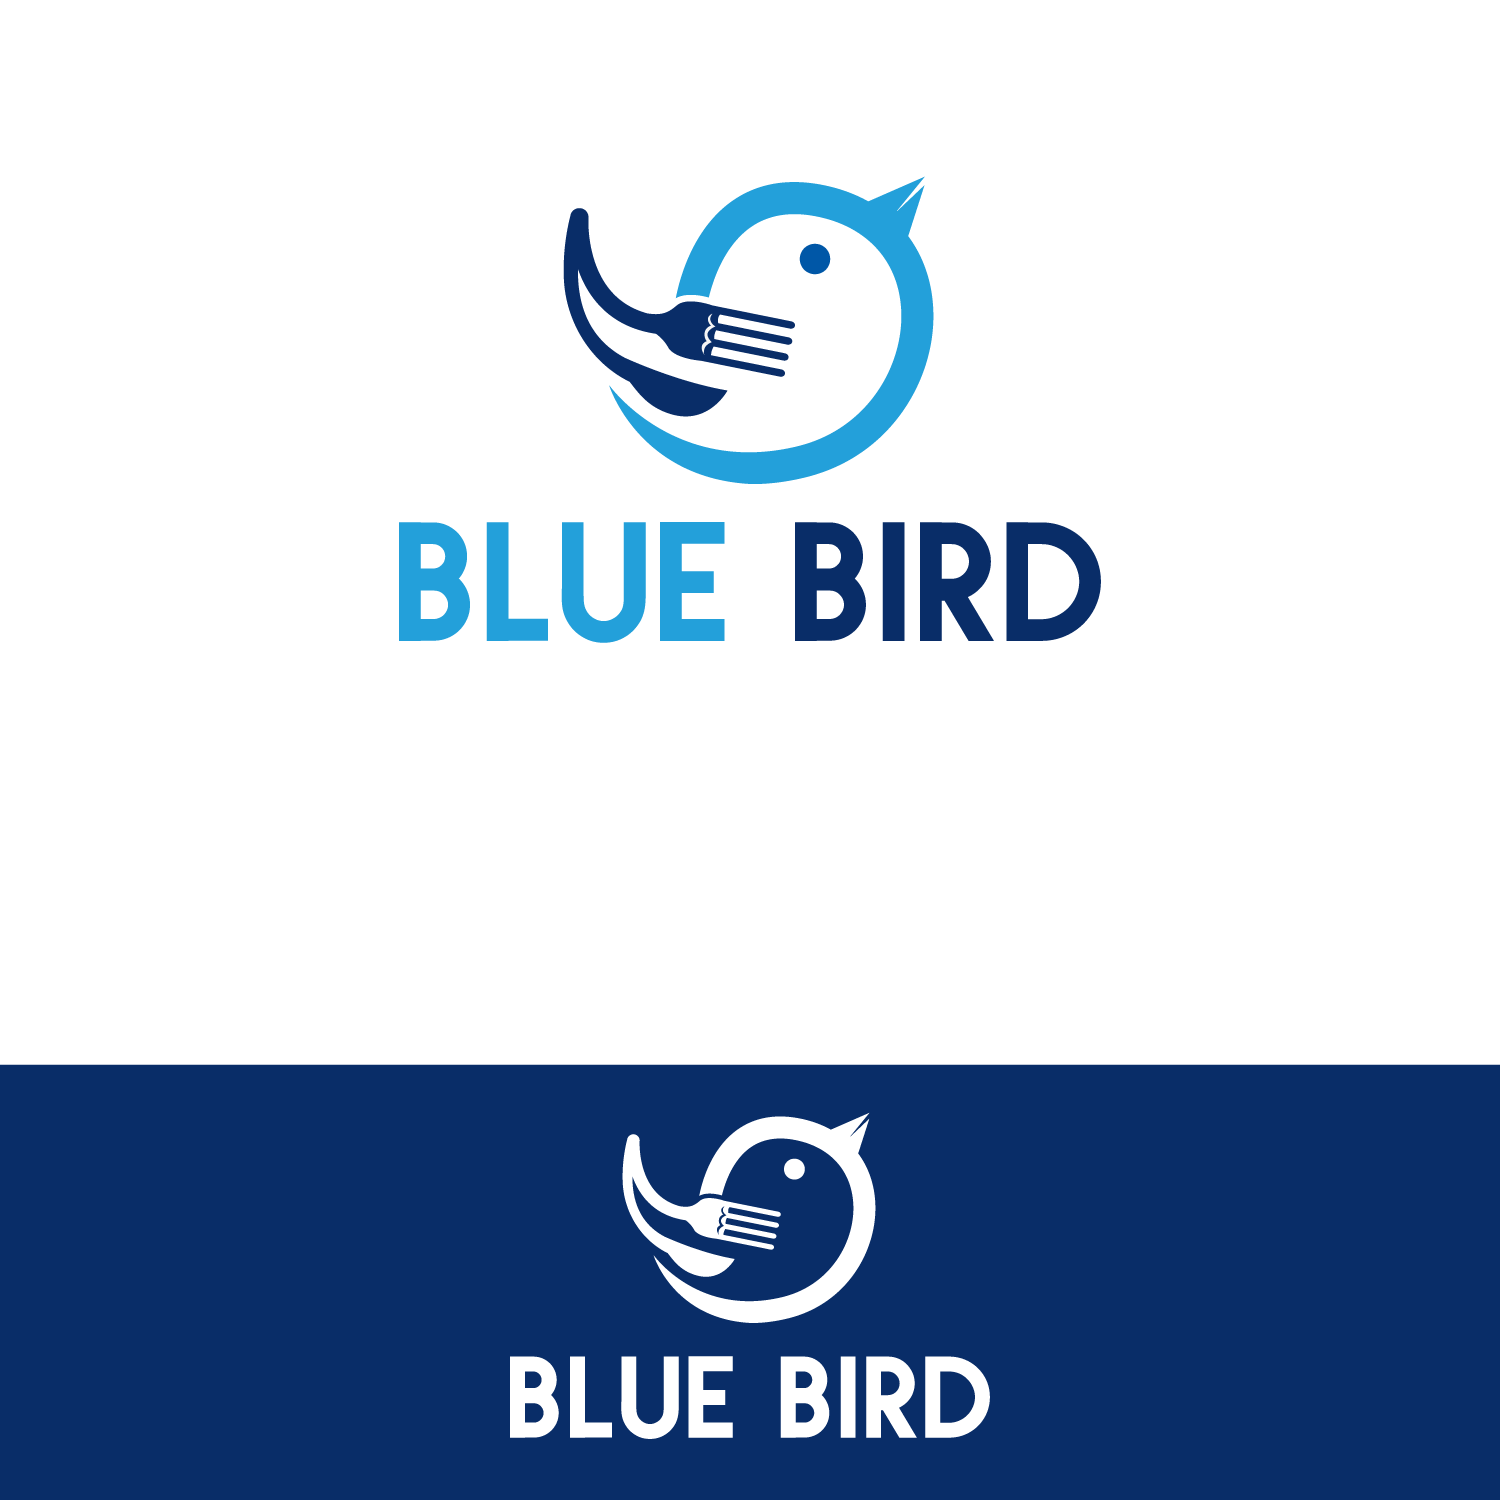 Blue Bird Company Logo - Elegant, Modern, Distribution Logo Design for Blue Bird